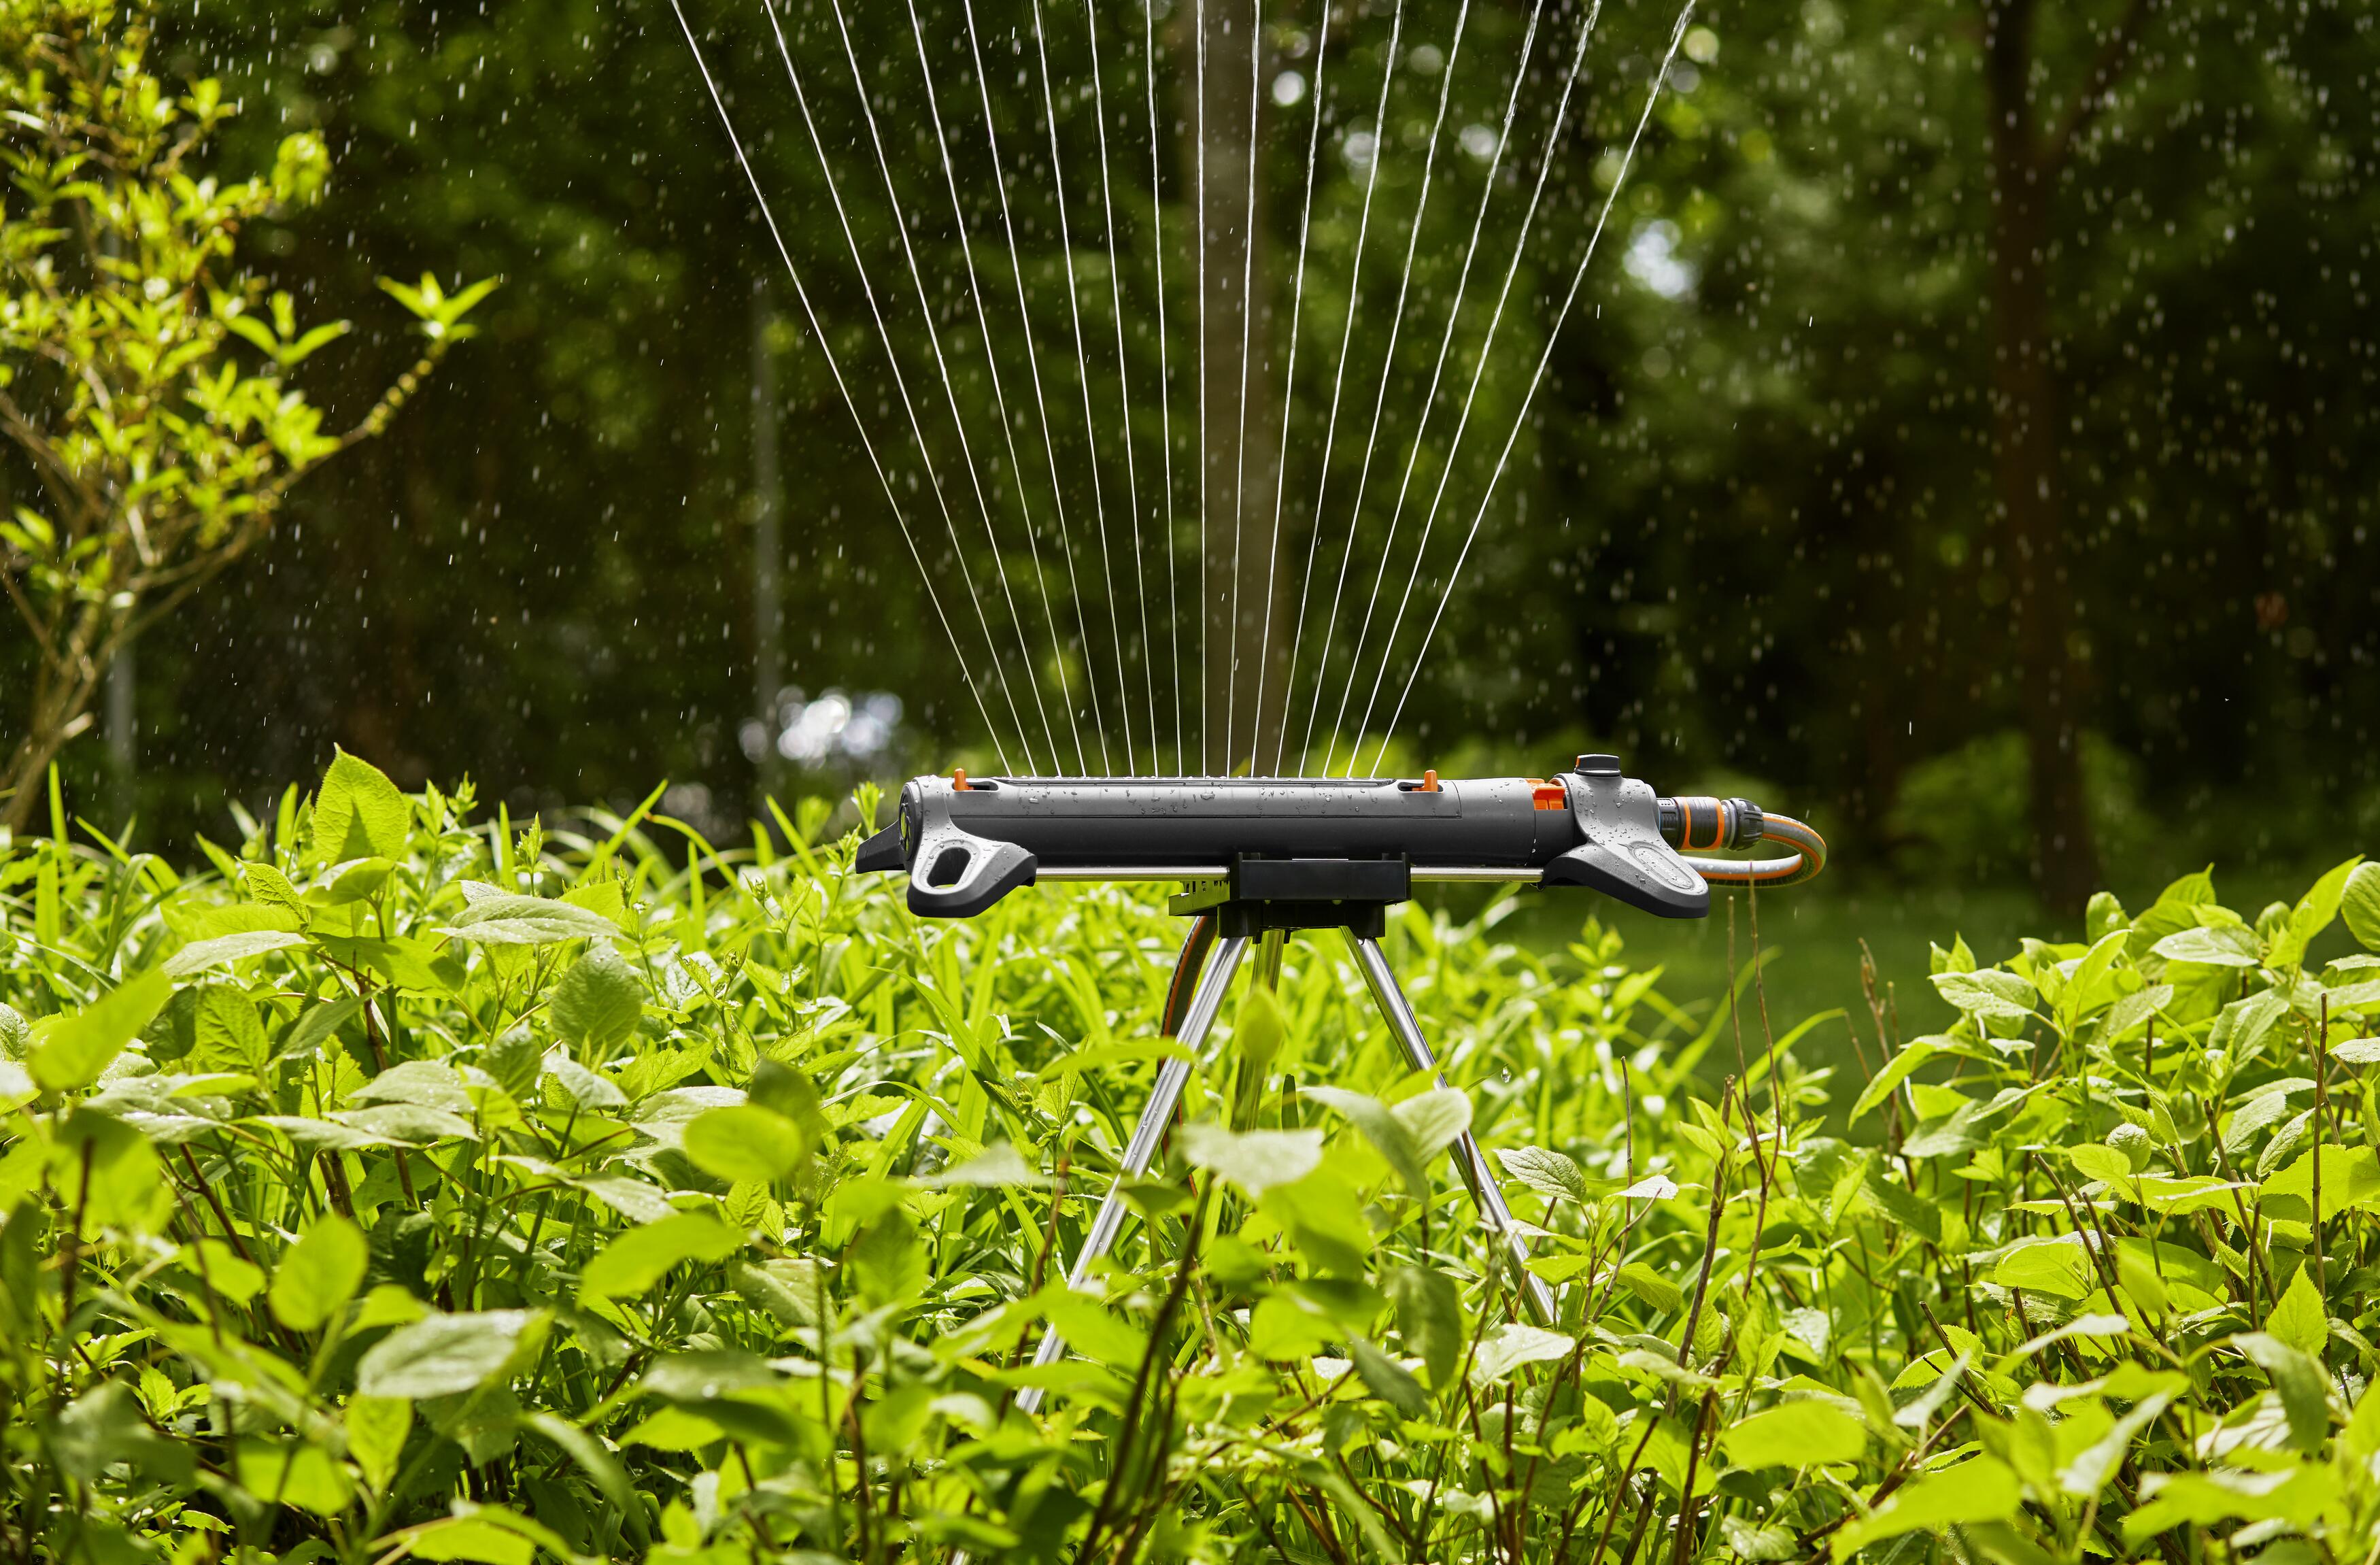 Gardena Sprinkler Tripod Accessory Folding Legs Watering Tool 50 cm 2075-20